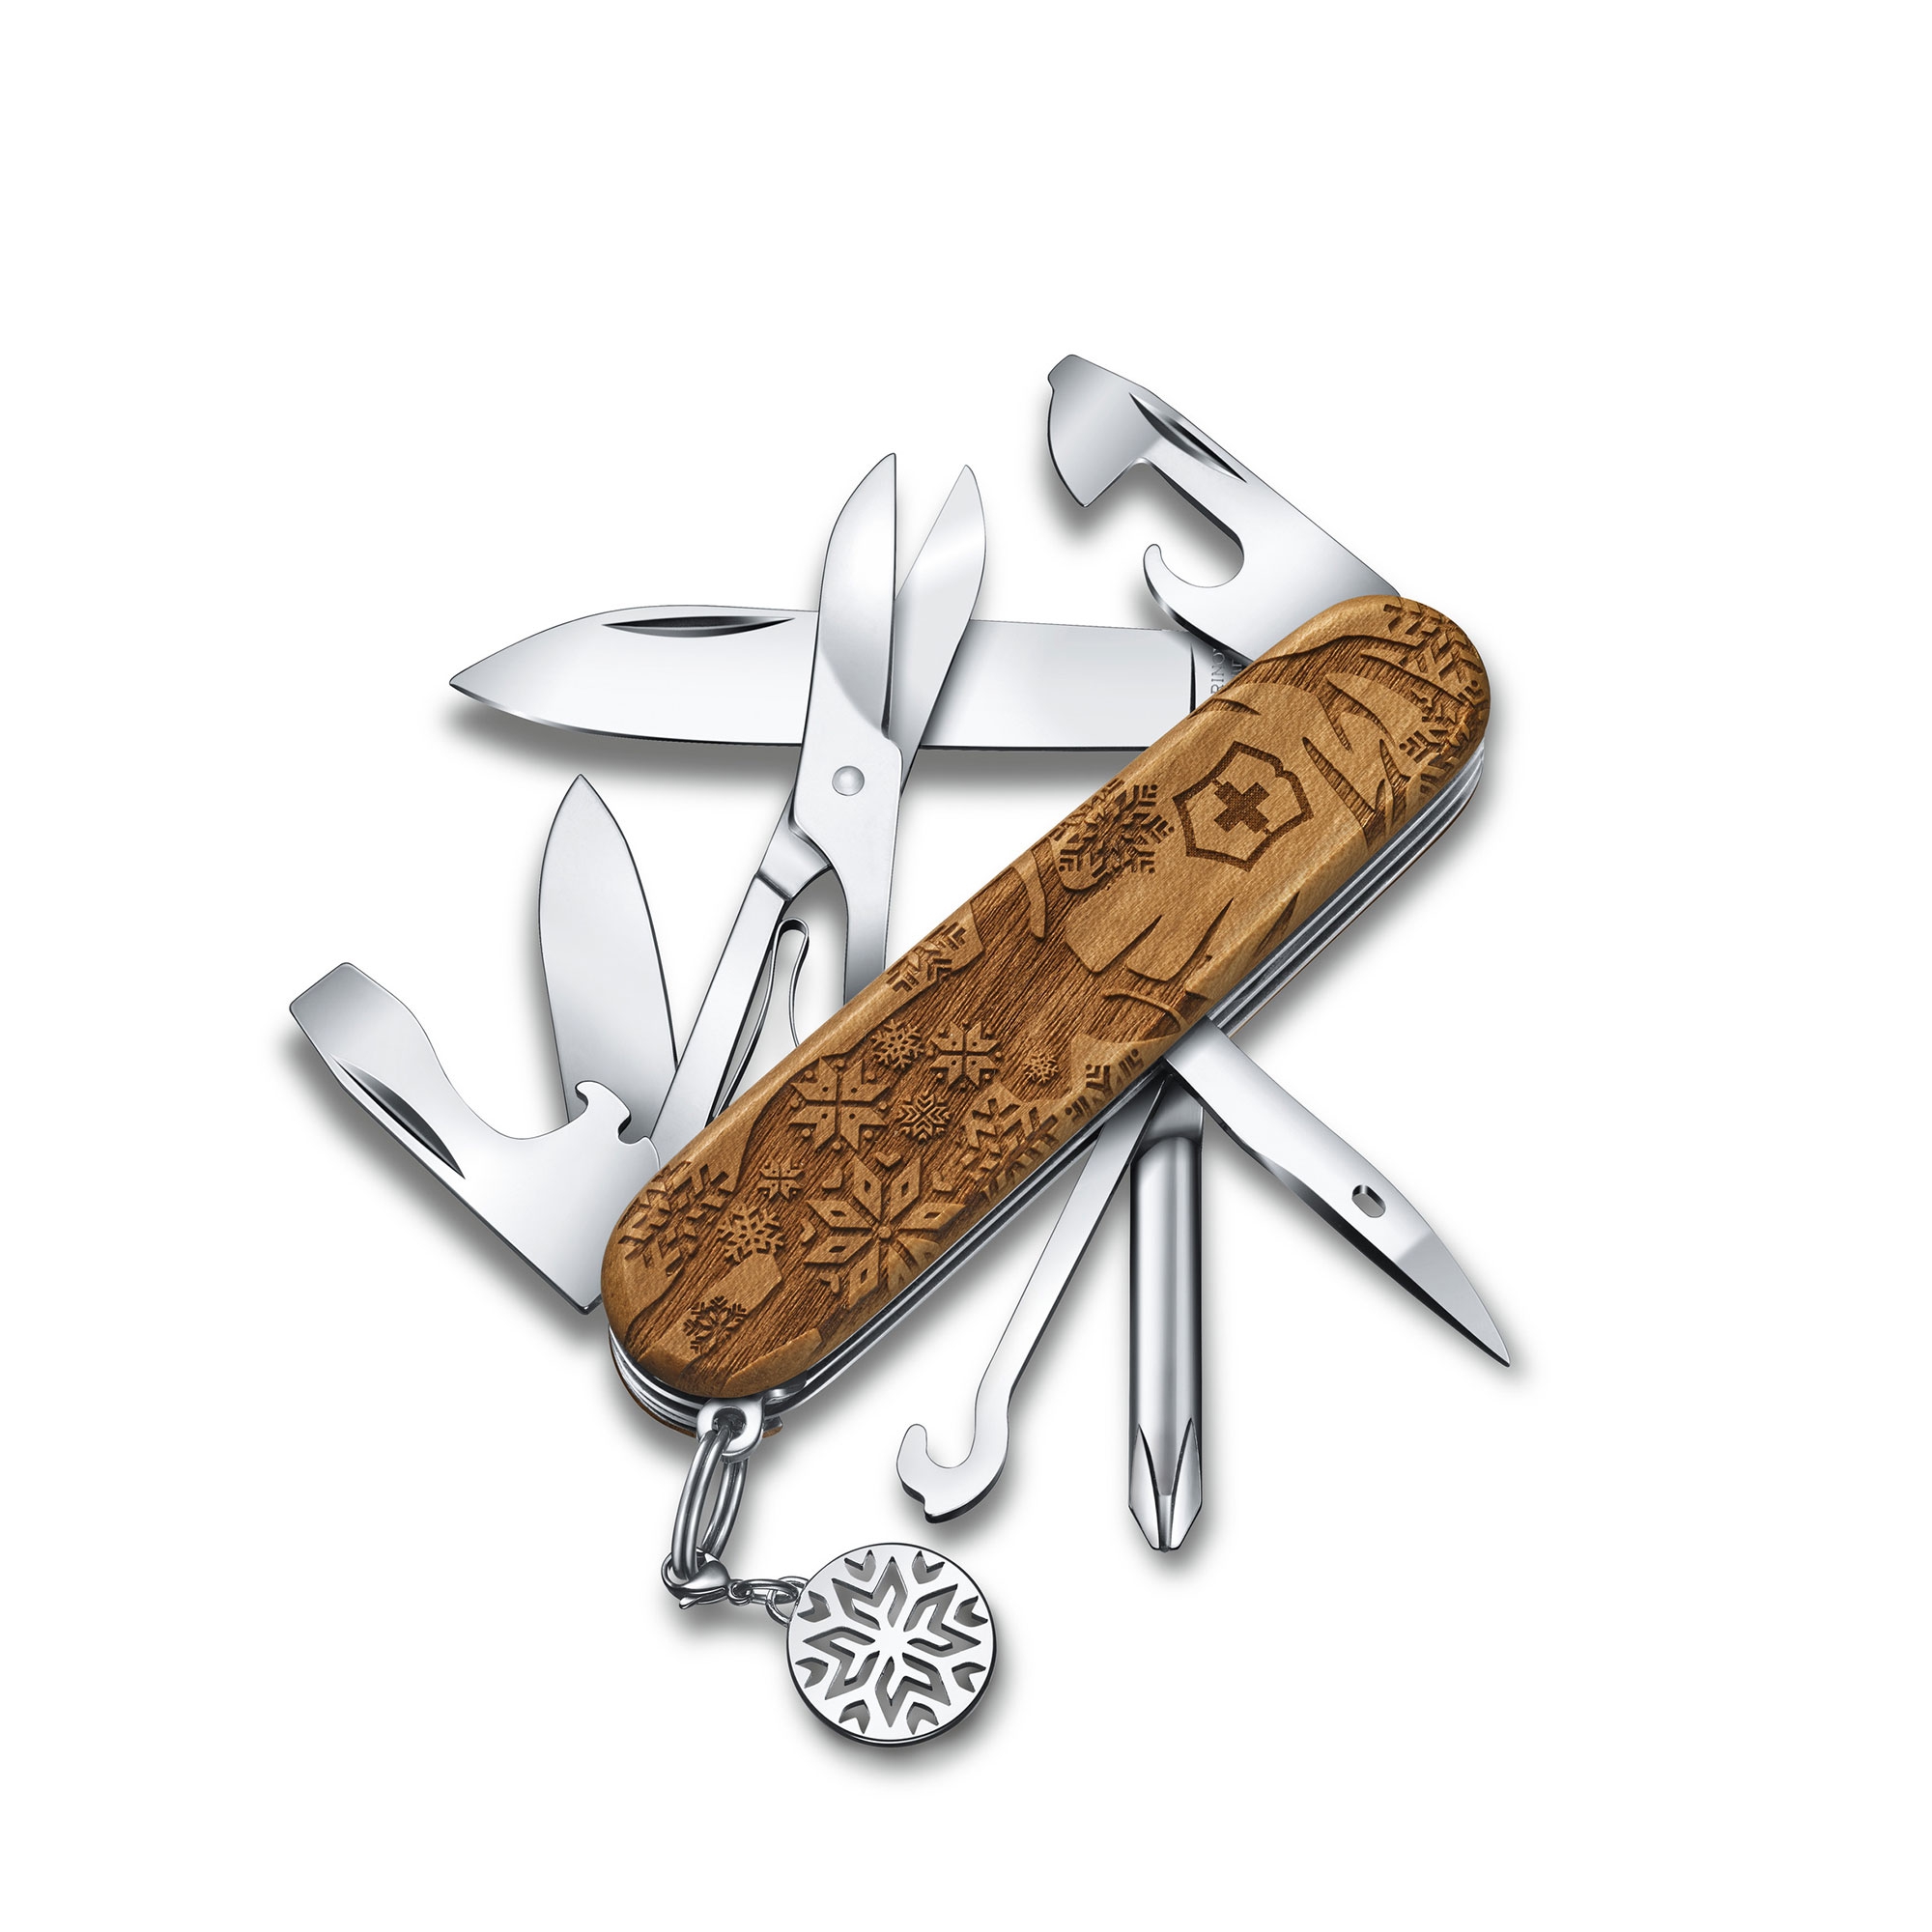 Victorinox - Pocket knife Super Tinker Wood, 91 mm, Winter Magic Limited Edition